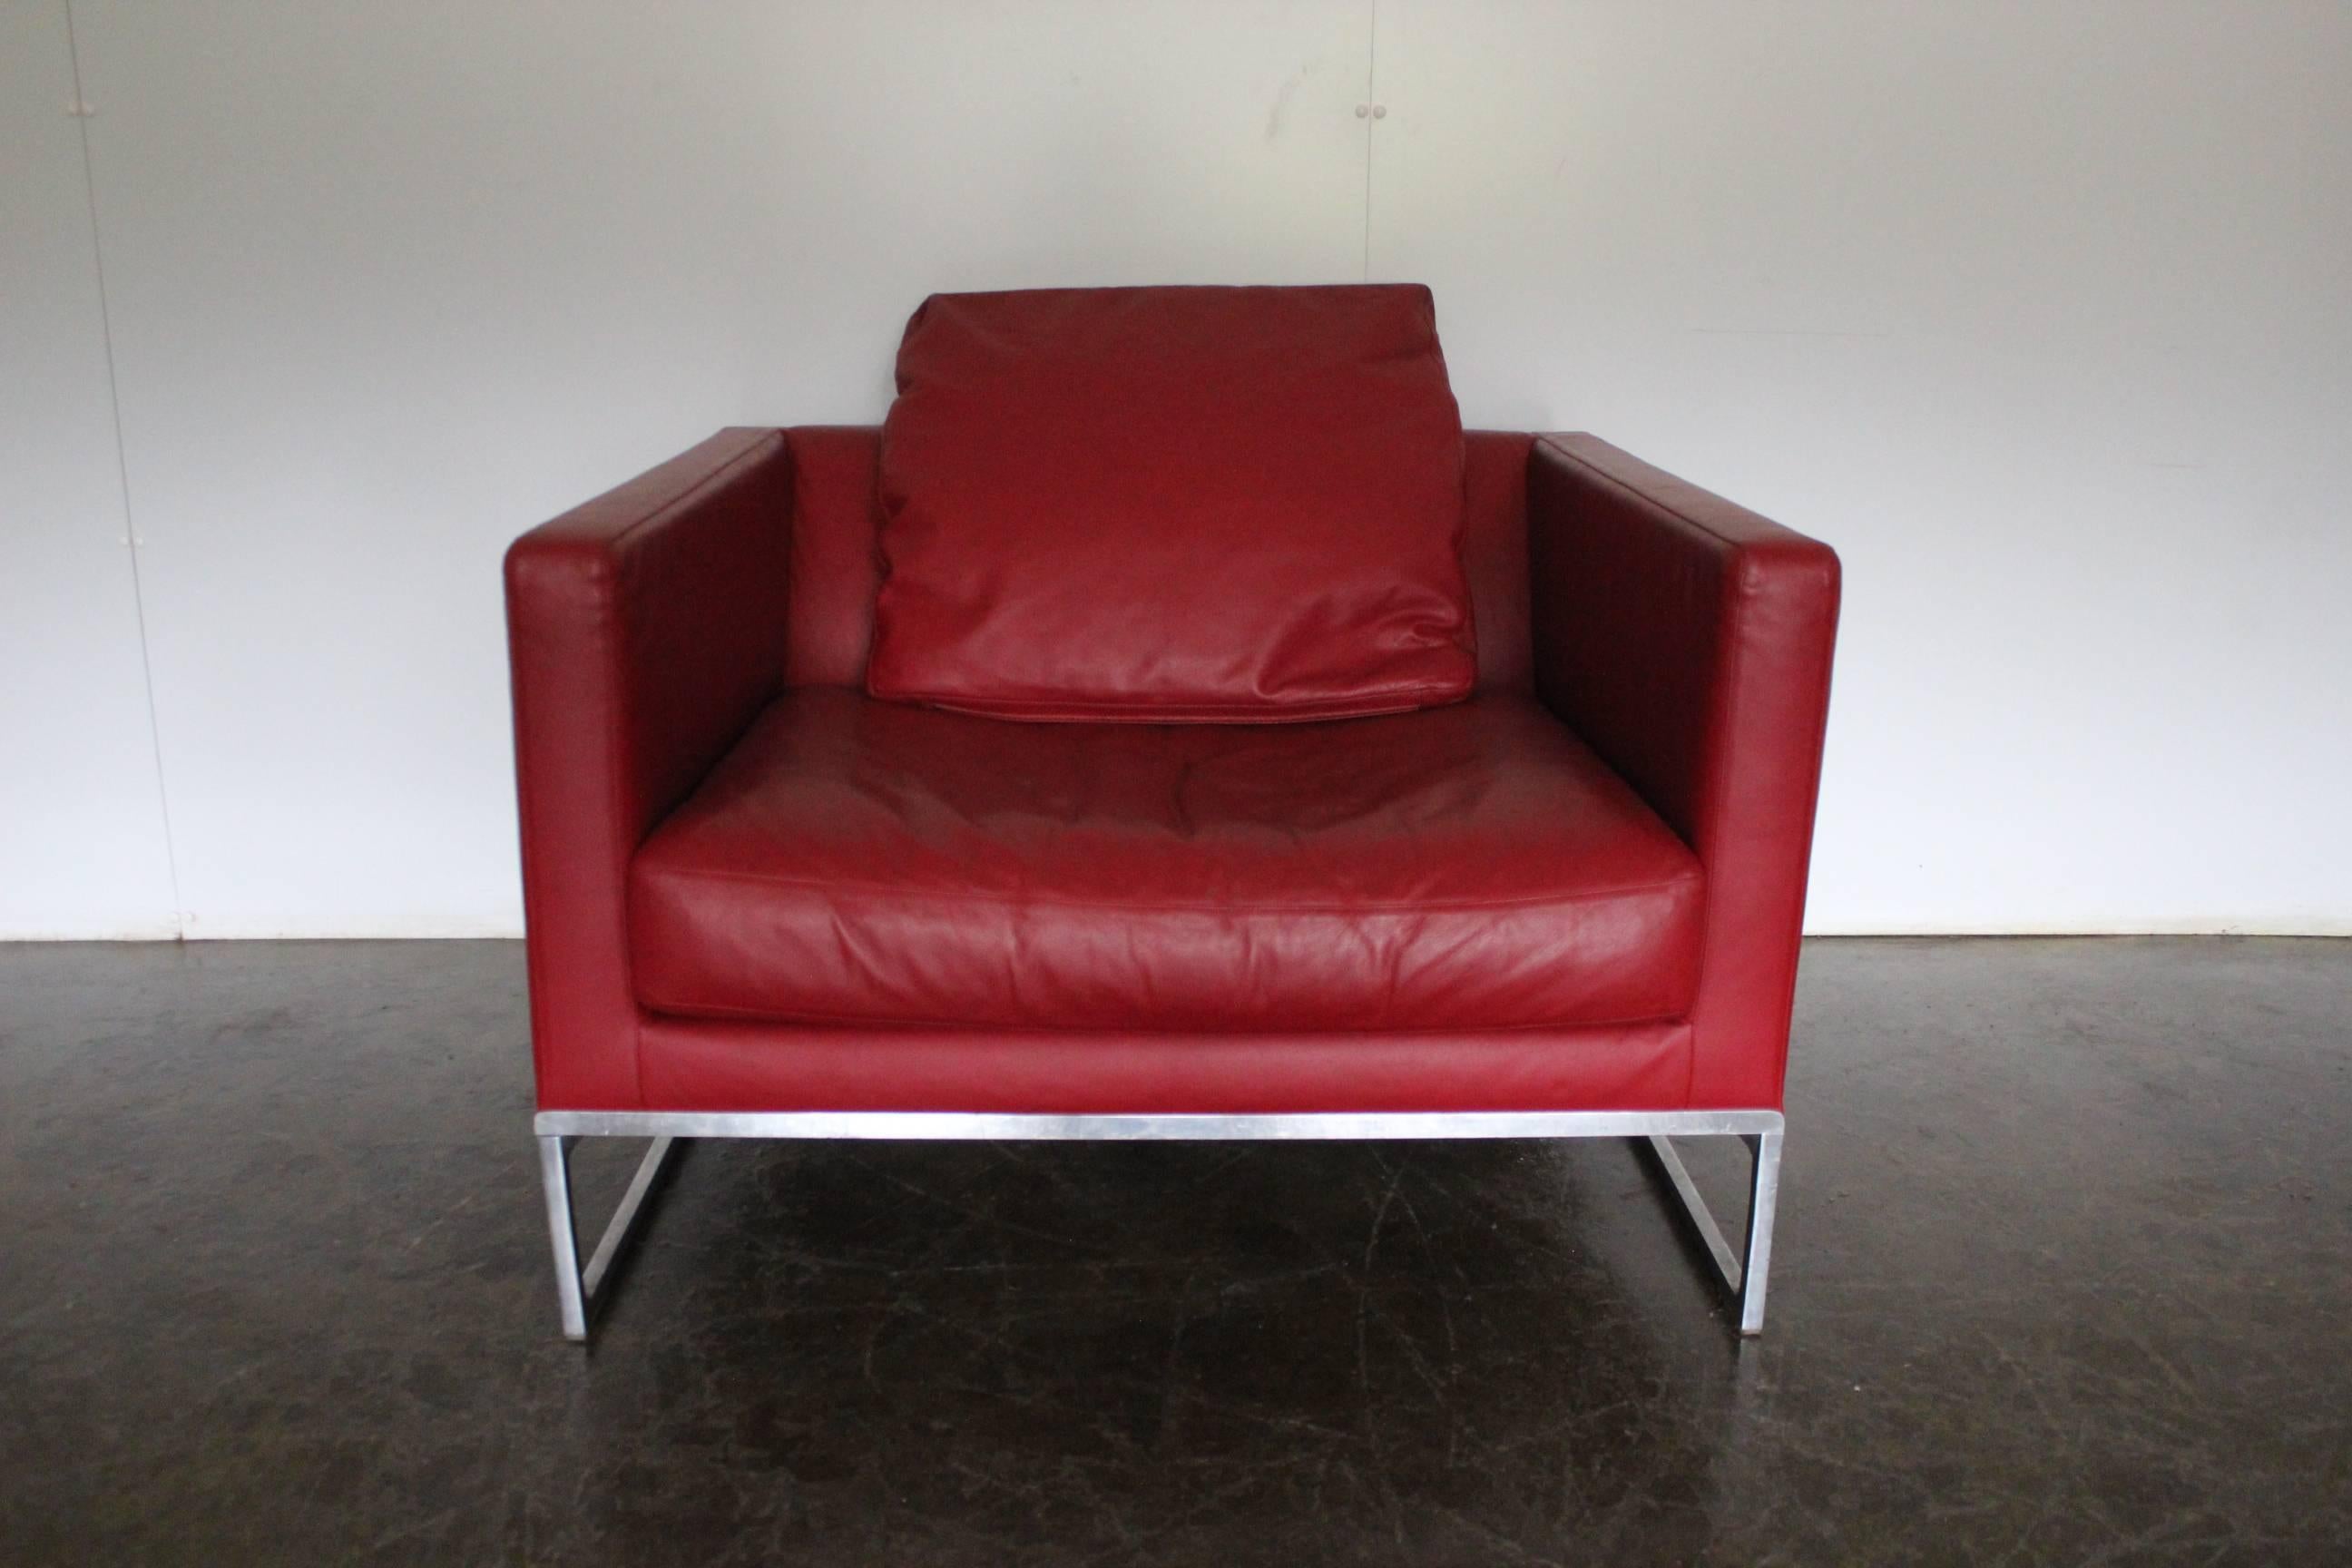 Modern B&B Italia “Tight” Large Armchair in “Gamma” Red Leather